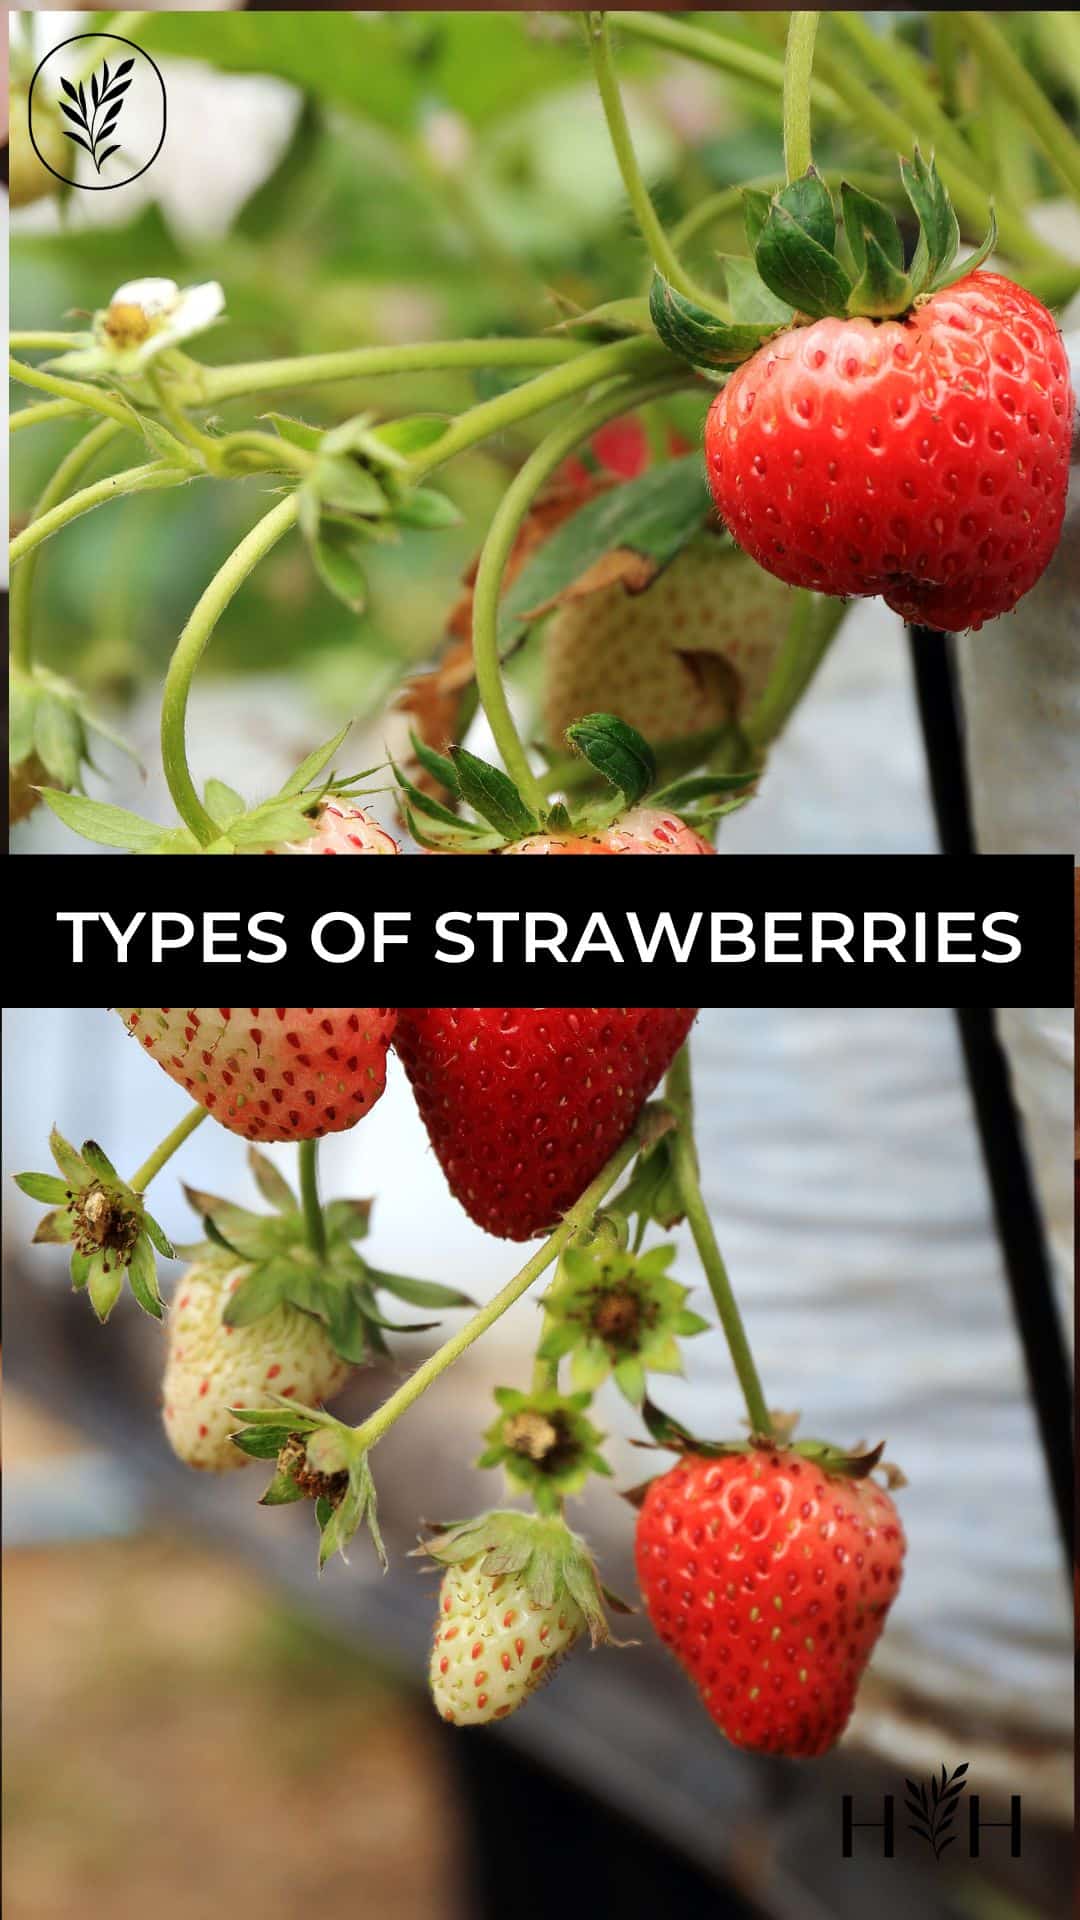 Types of strawberries via @home4theharvest